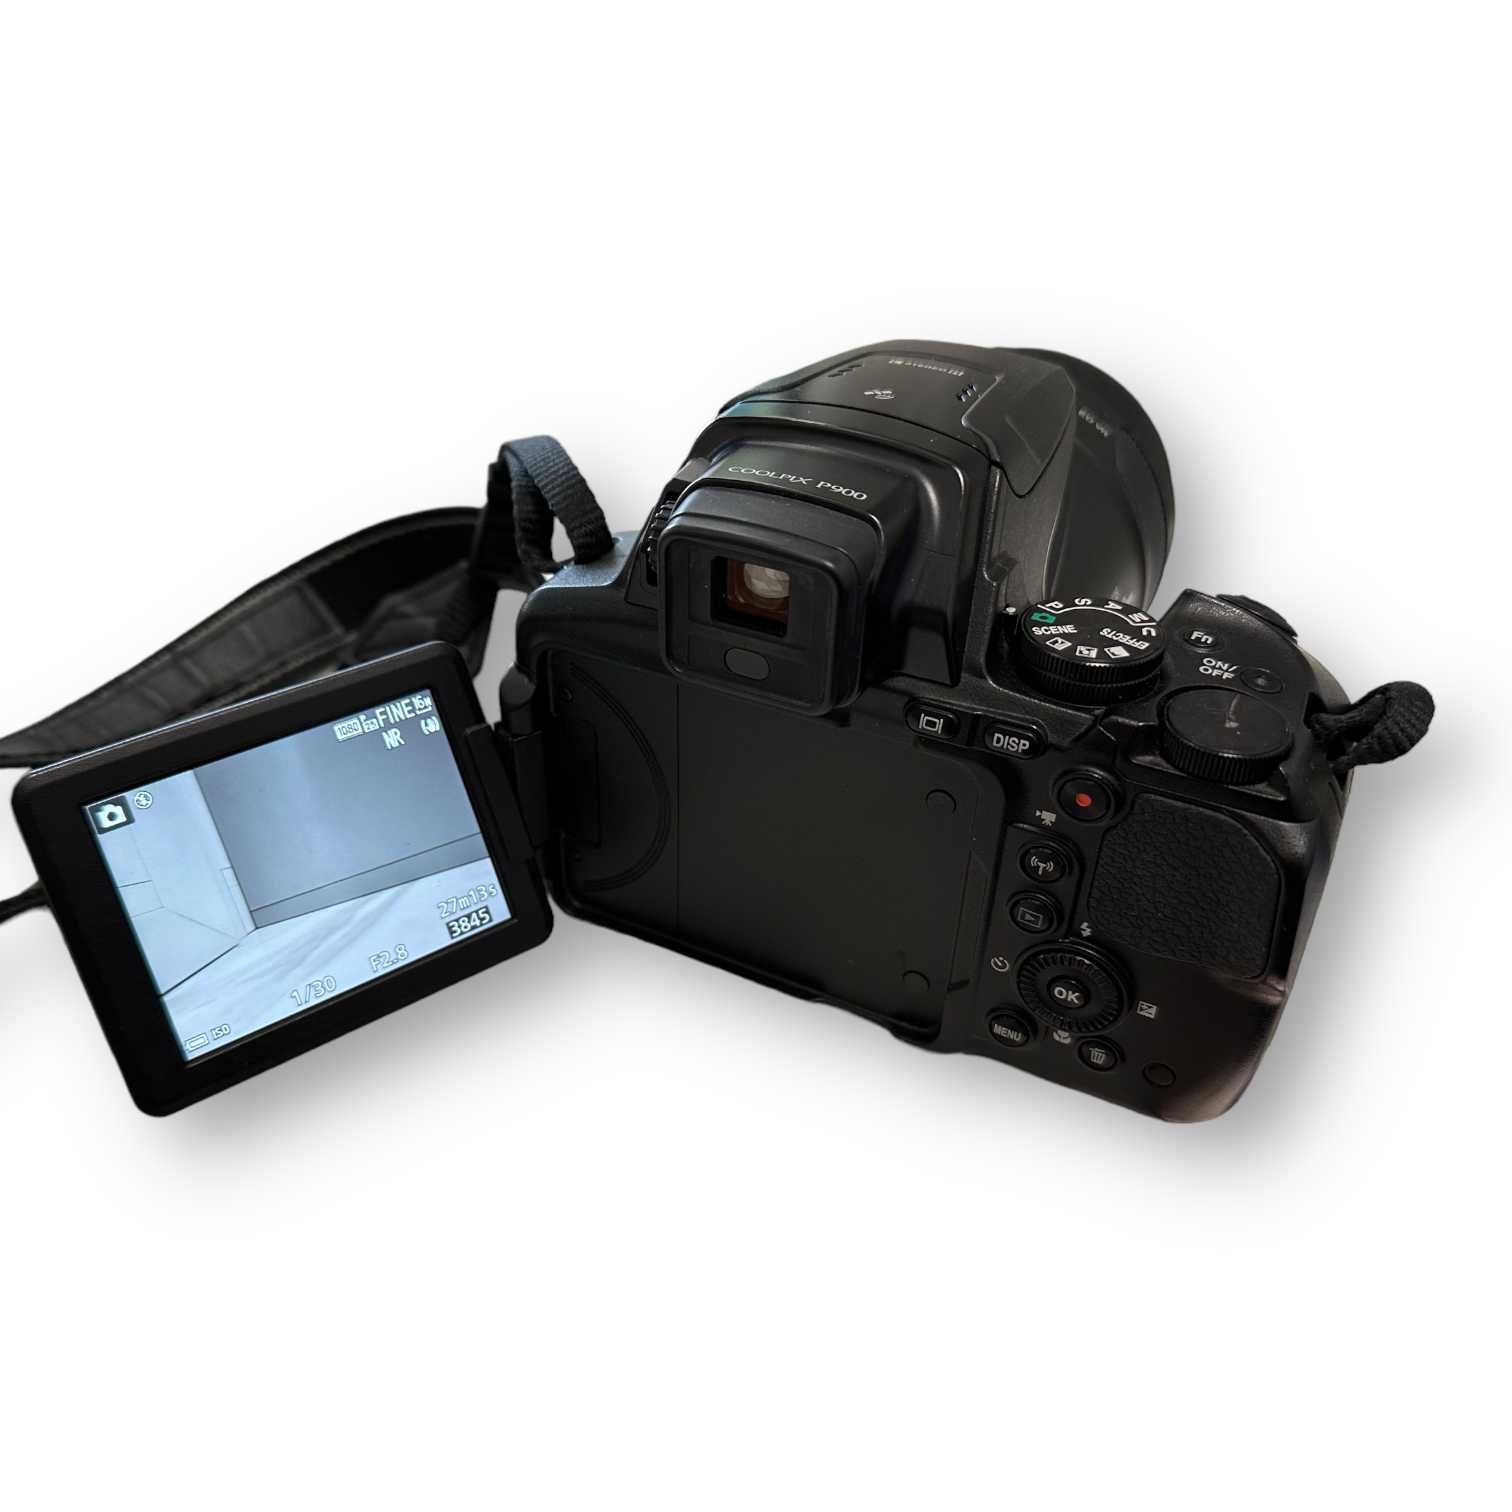 Aparat cyfrowy Nikon P900 Black czarny